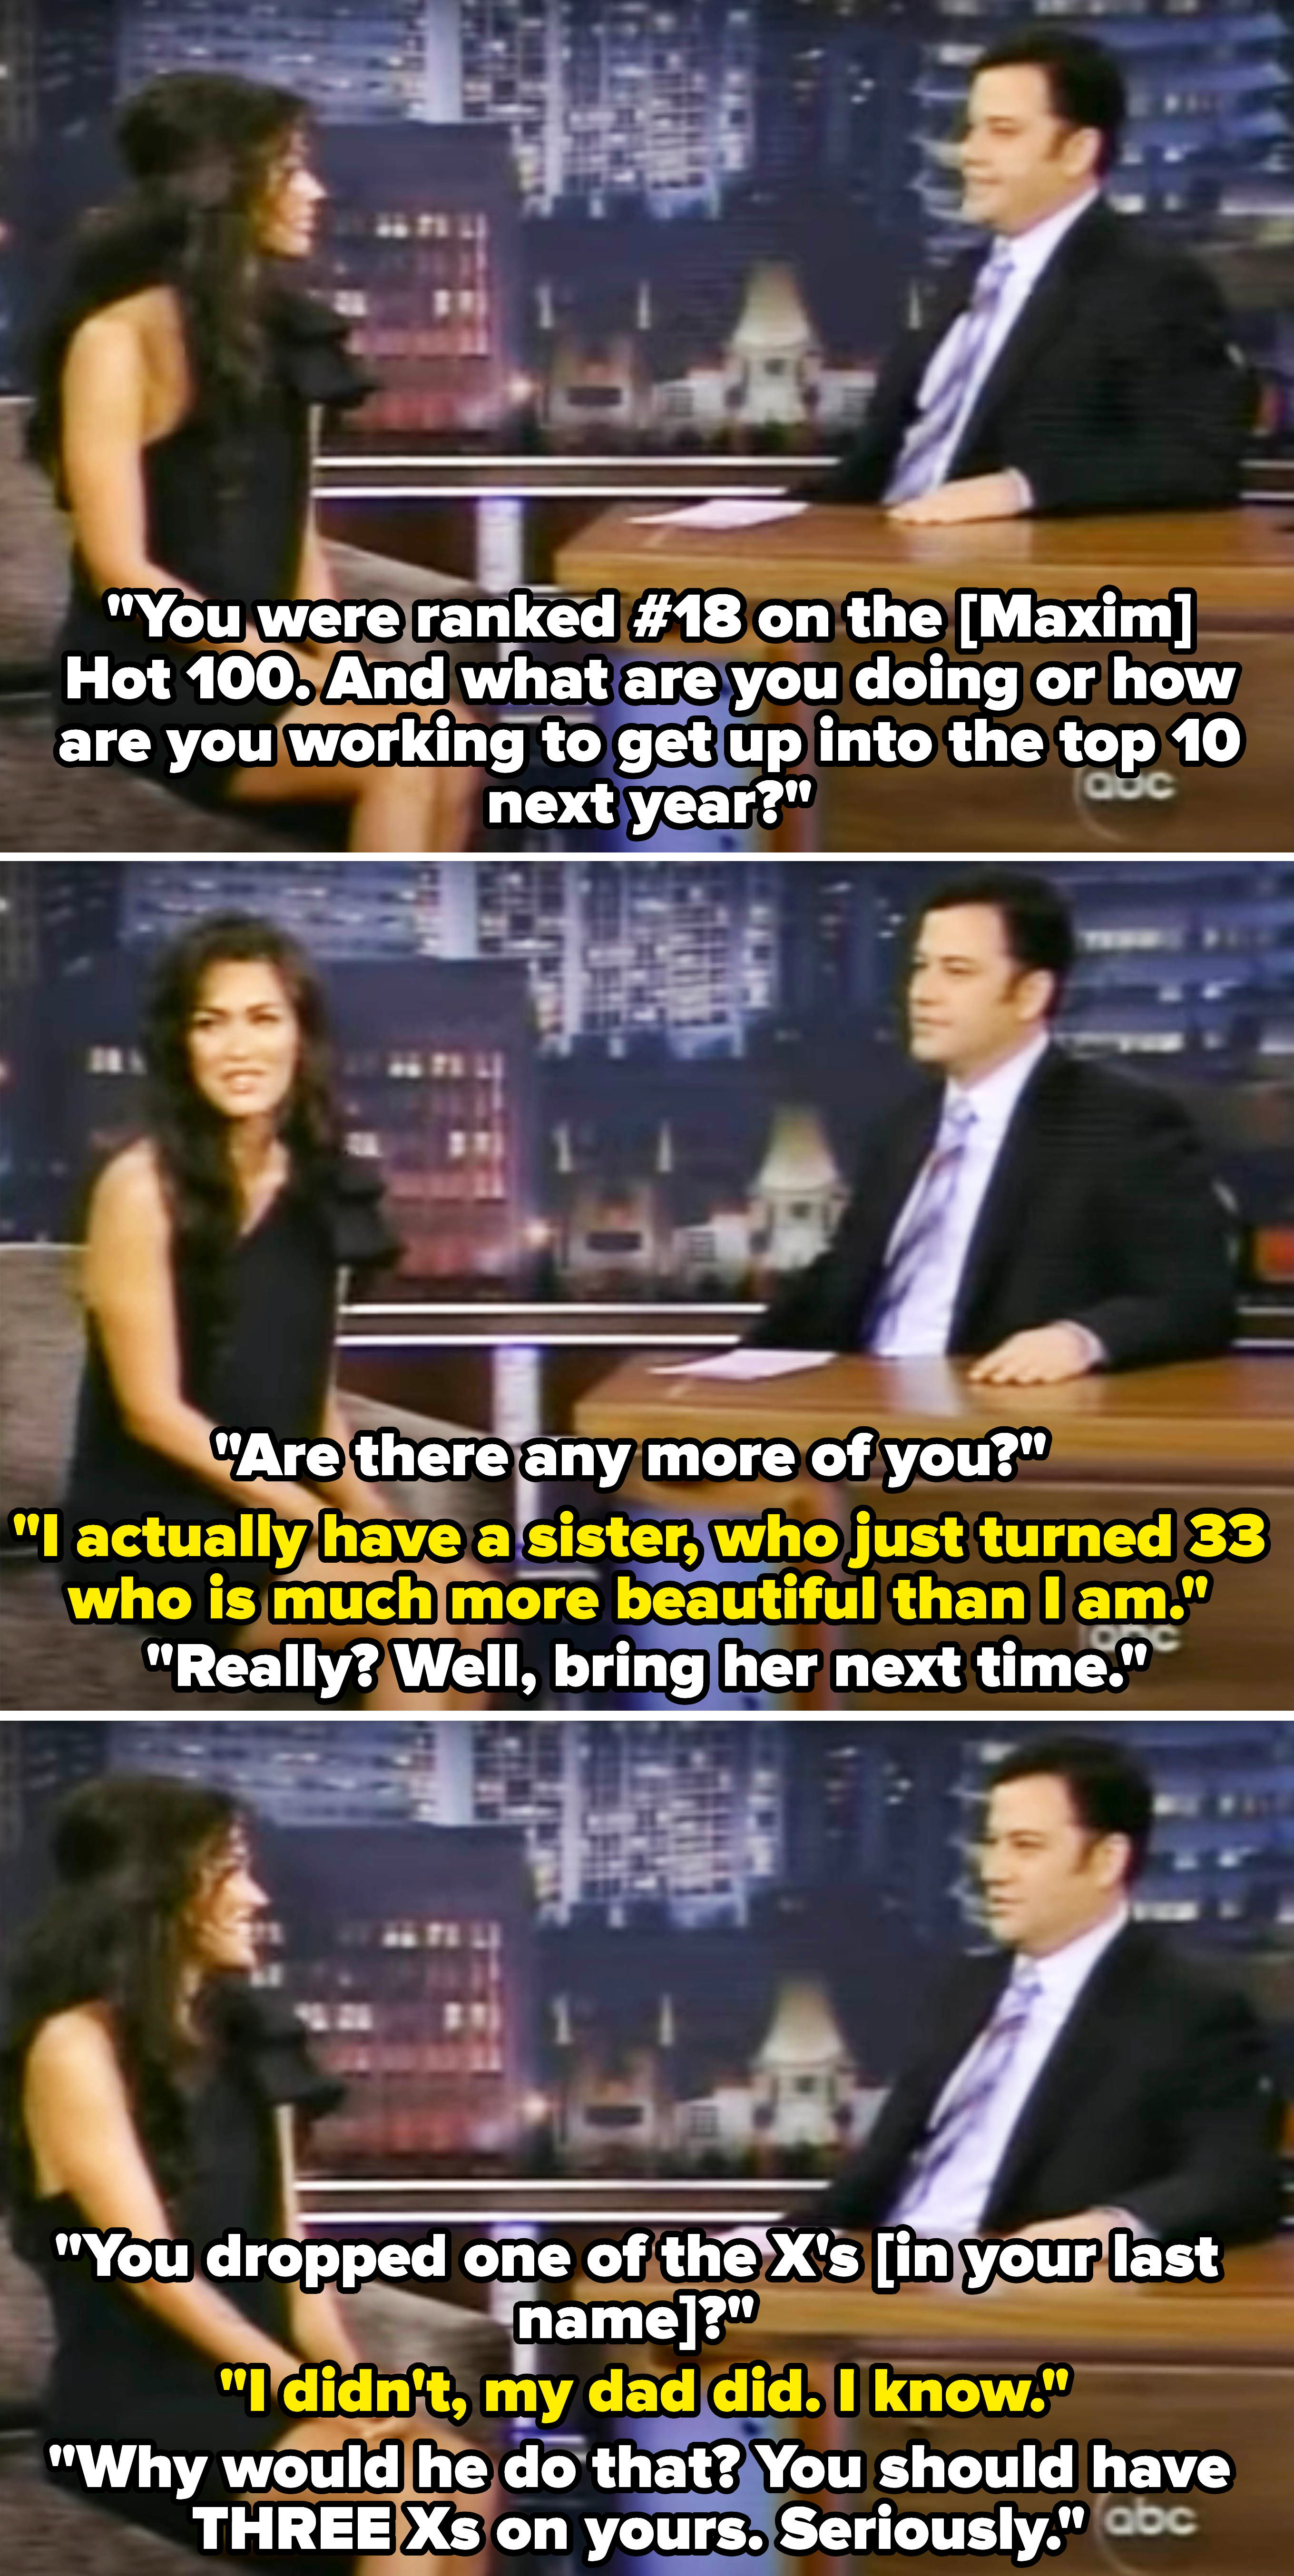 Megan Fox and Jimmy Kimmel